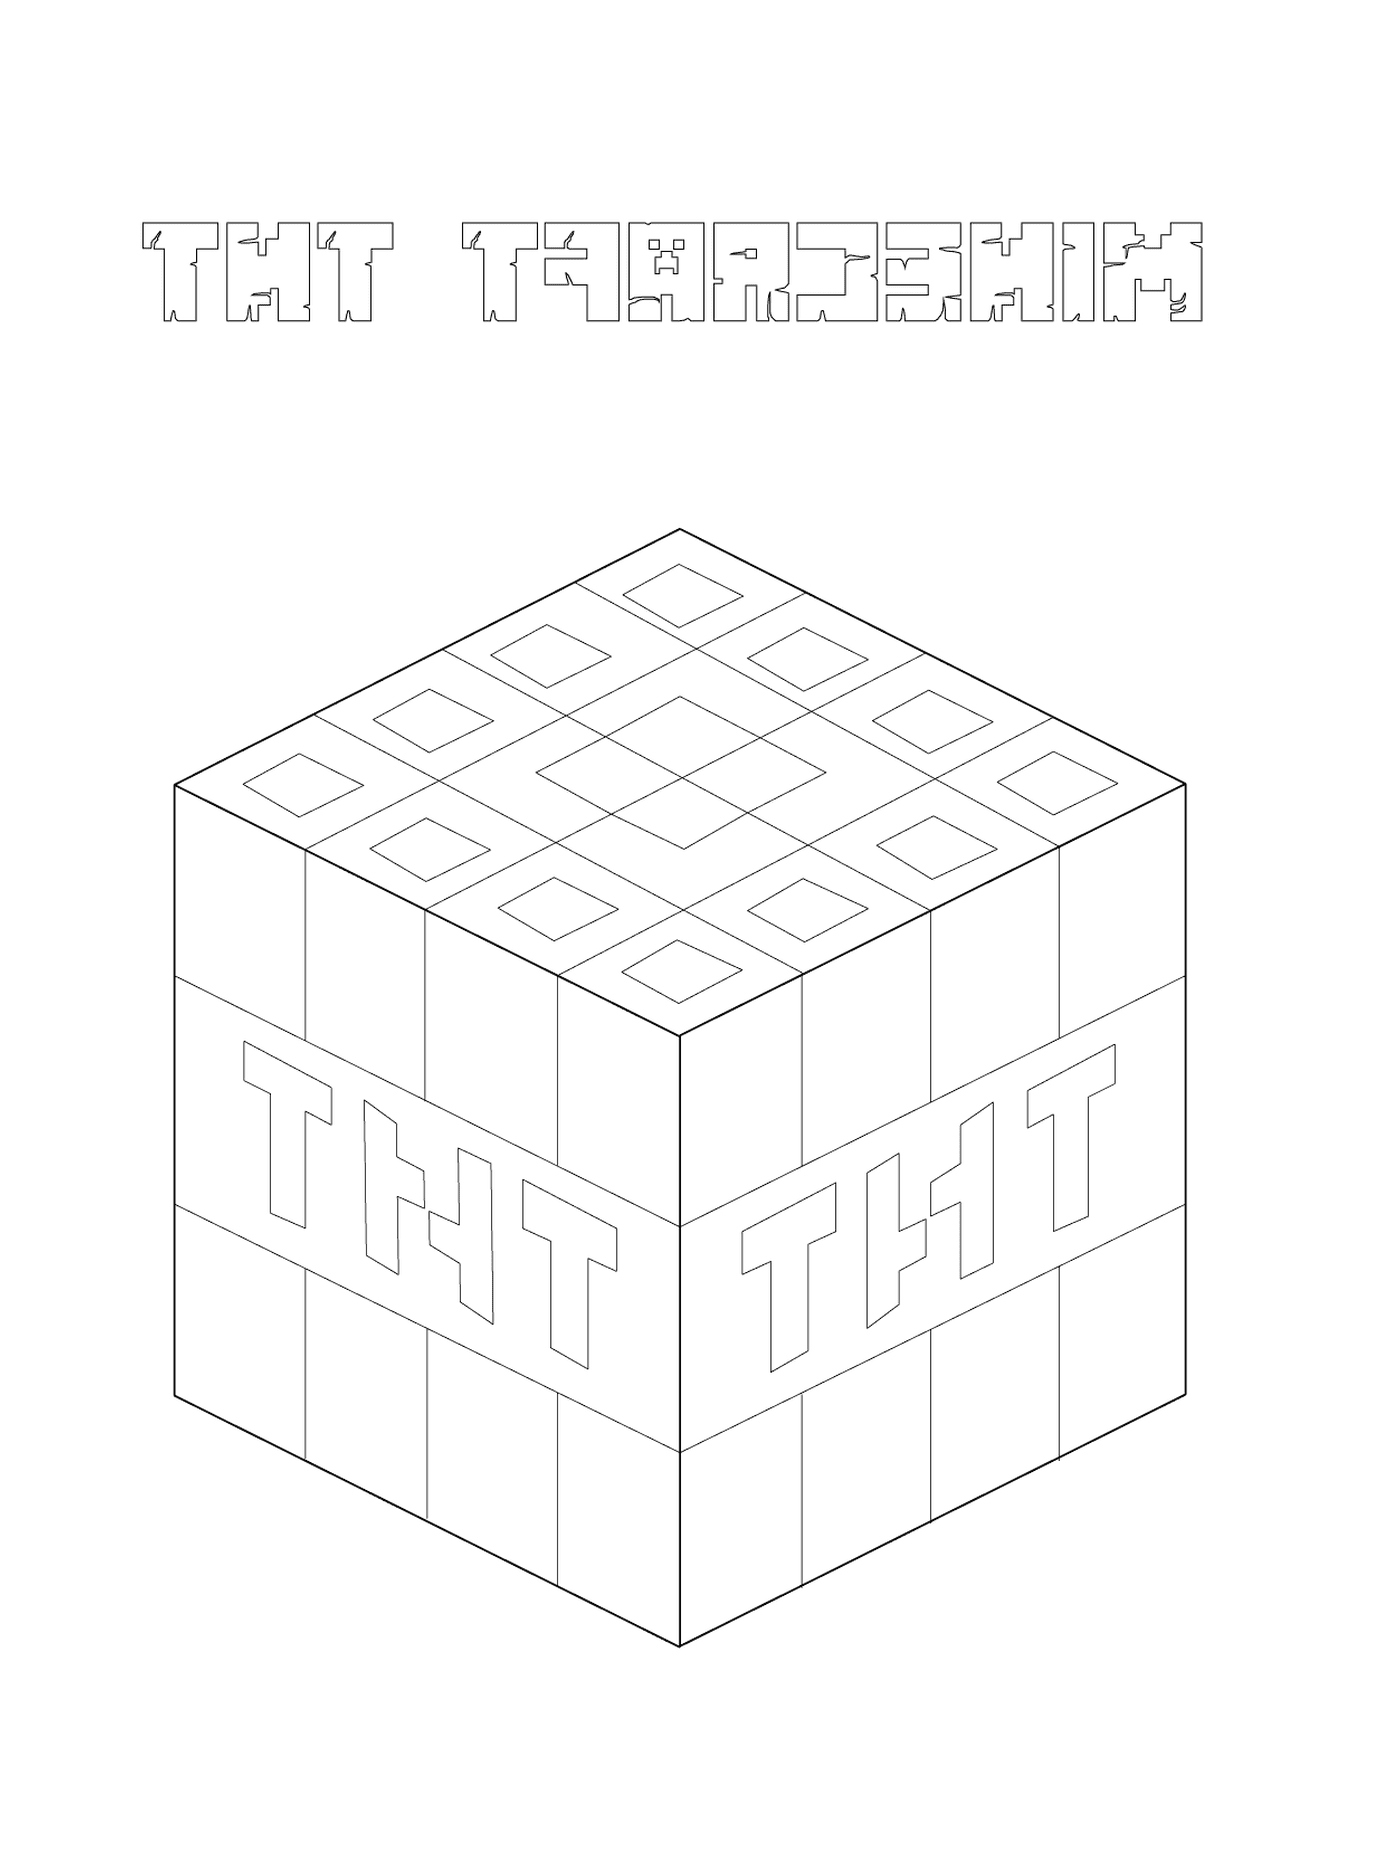  TNT Cube with tht inscription 